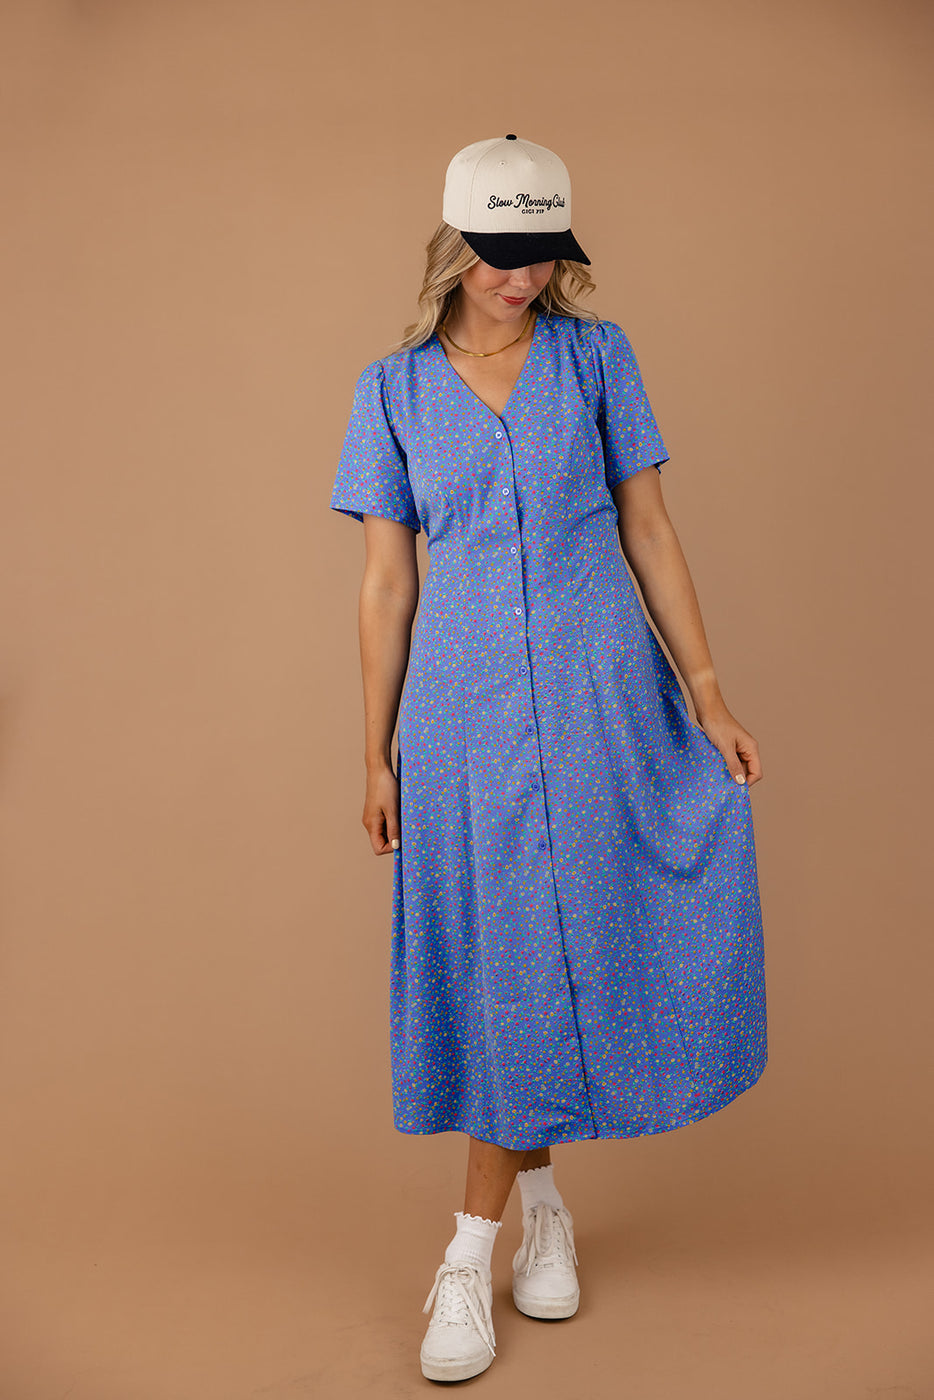 a woman in a blue dress